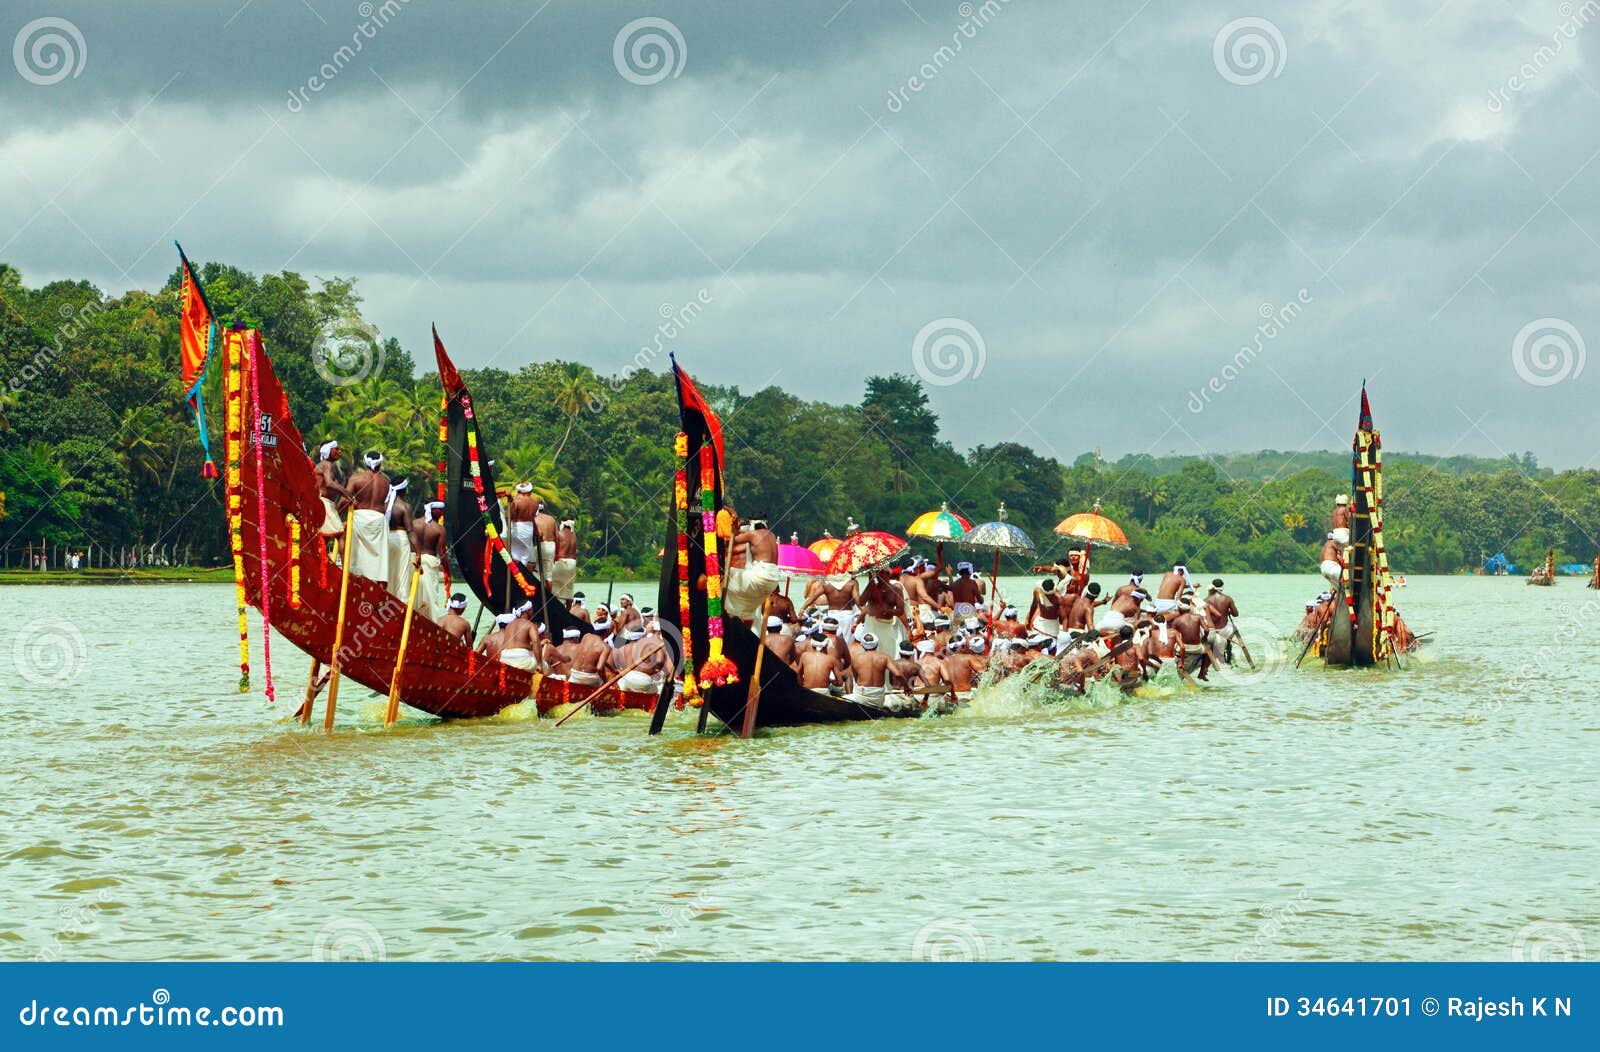 snake boat races of kerala editorial photo - image: 34641701